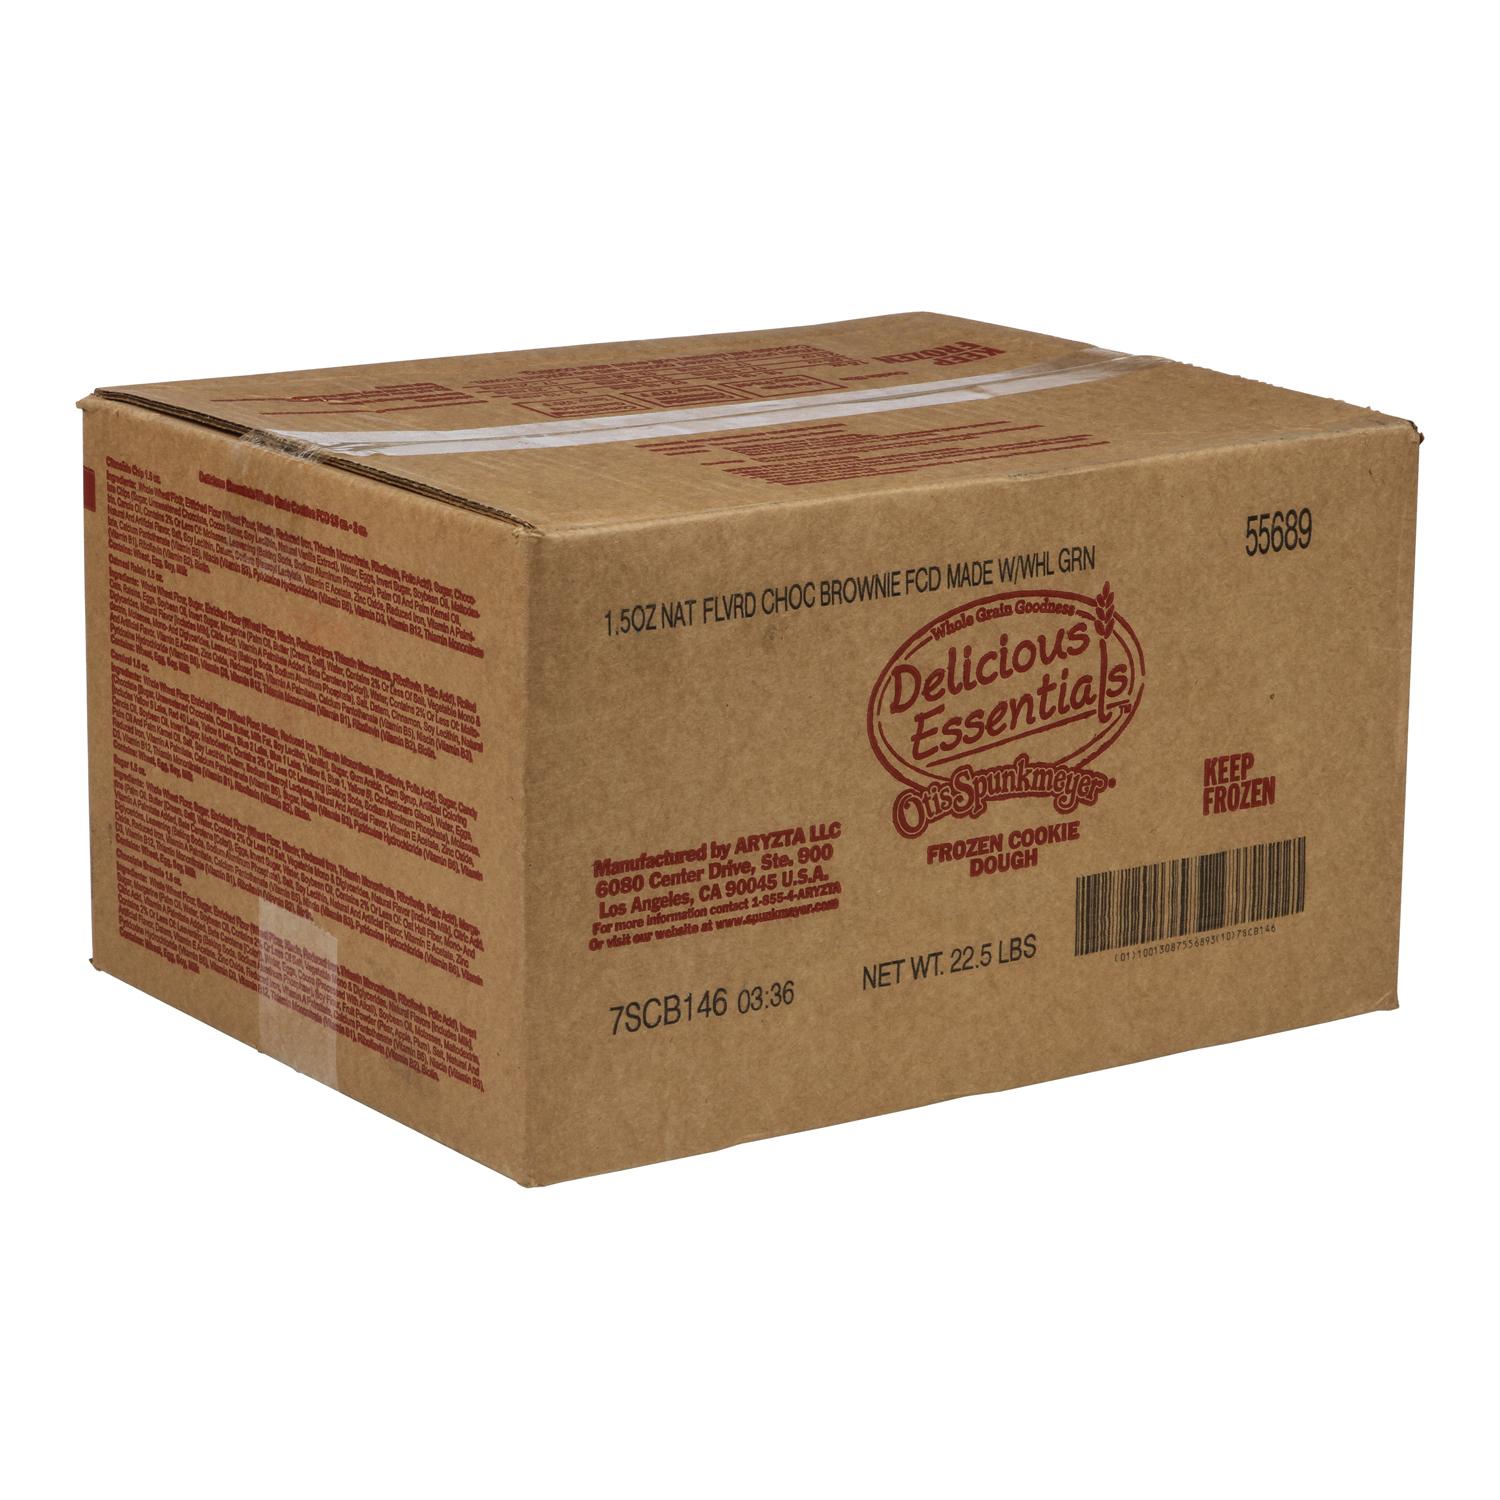 Image of cardboard box with chocolate brownie cookie